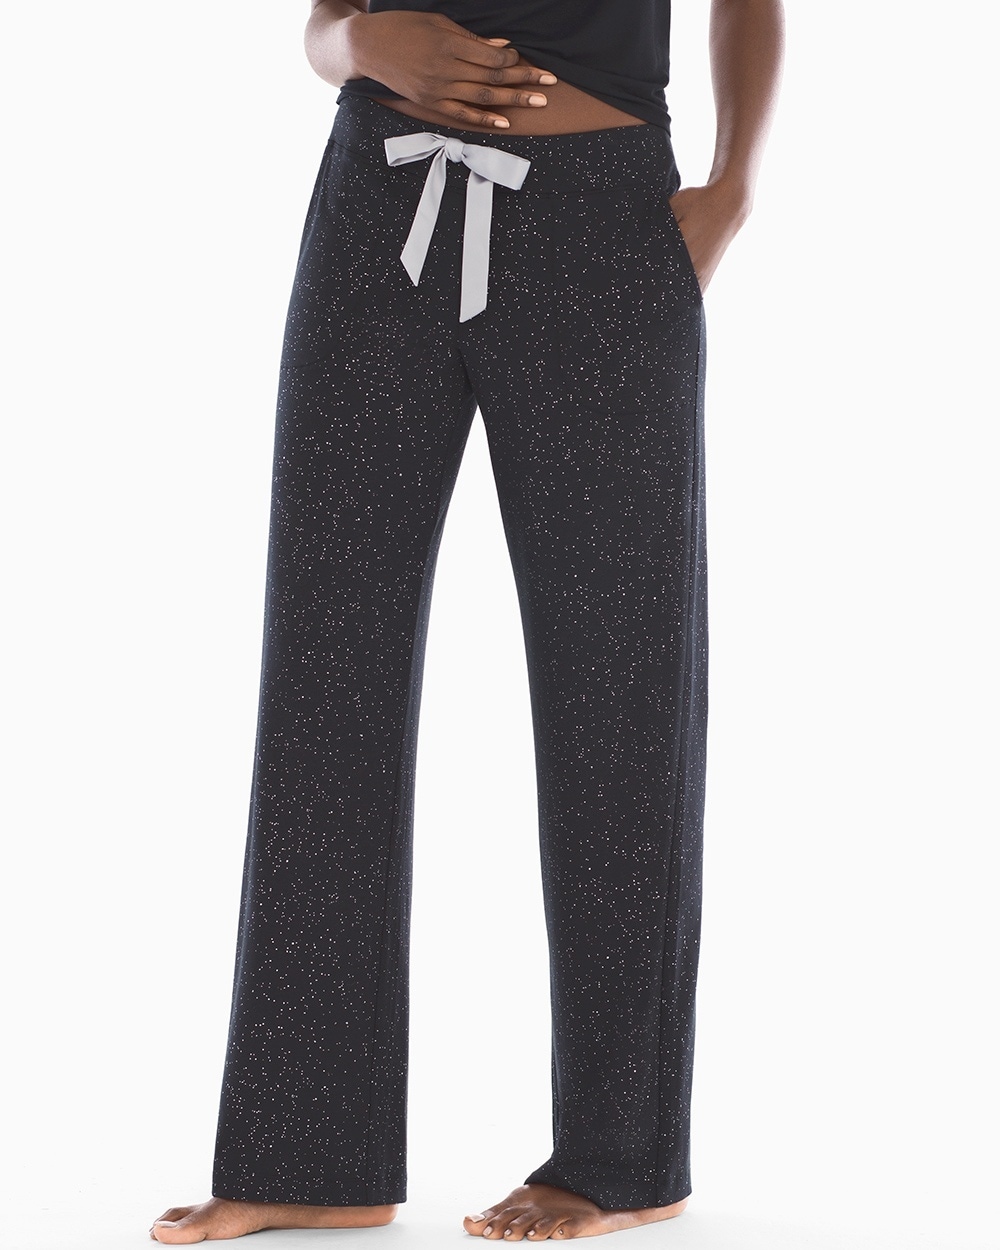 Embraceable Pajama Pants Glittered Black